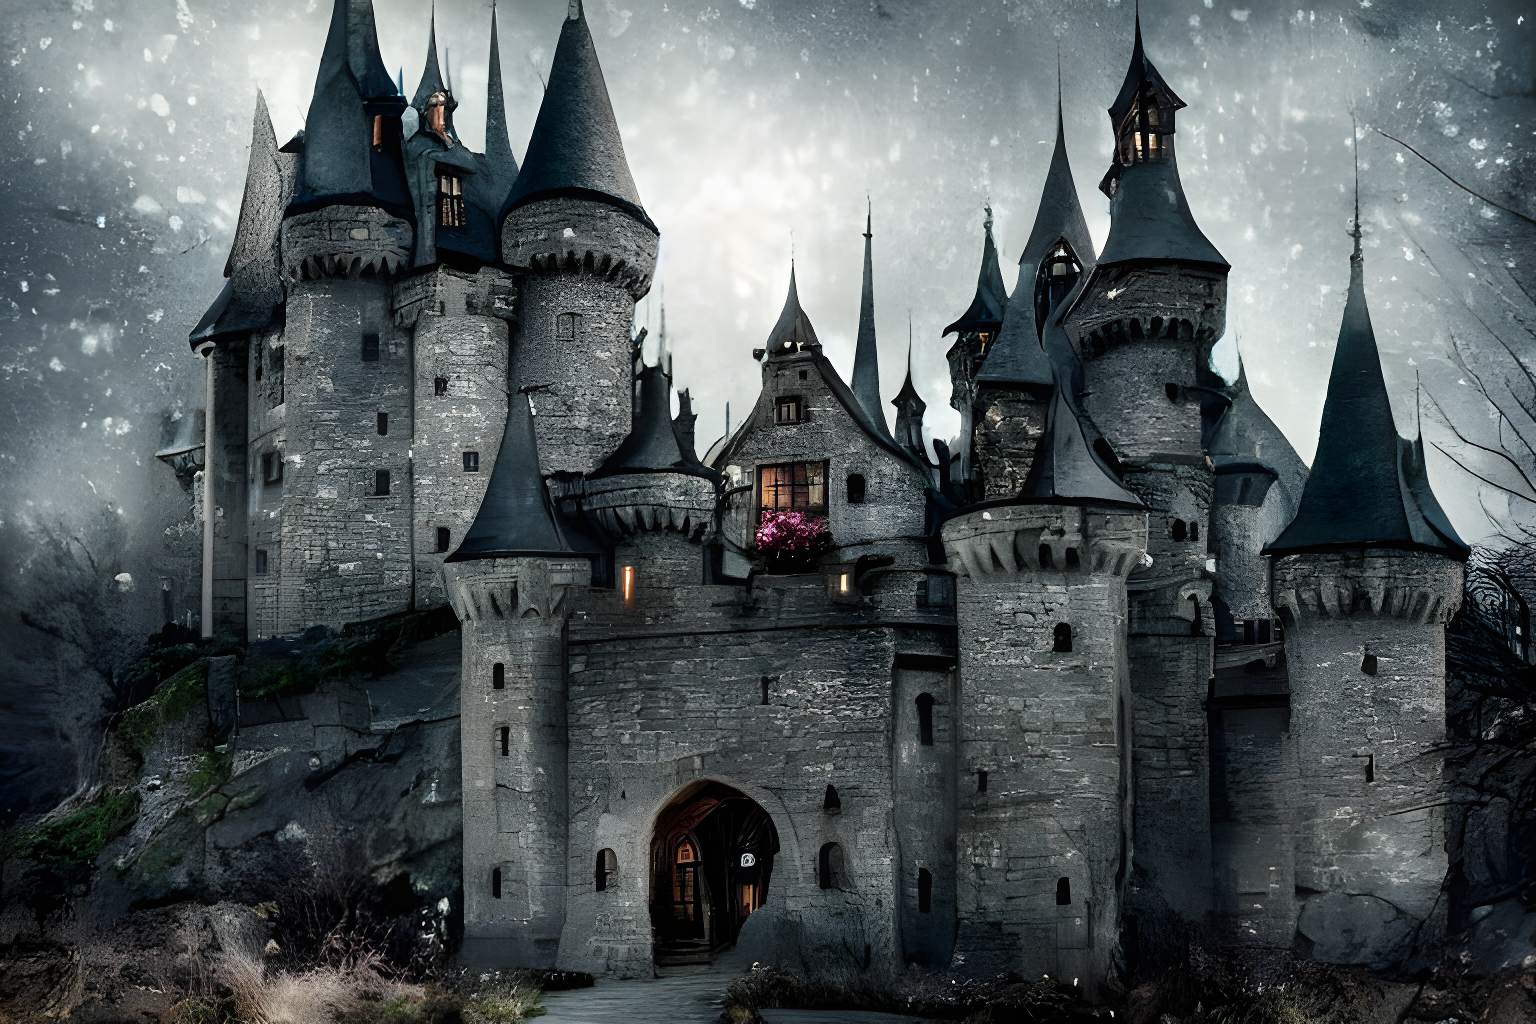 Magical Castle in Dark